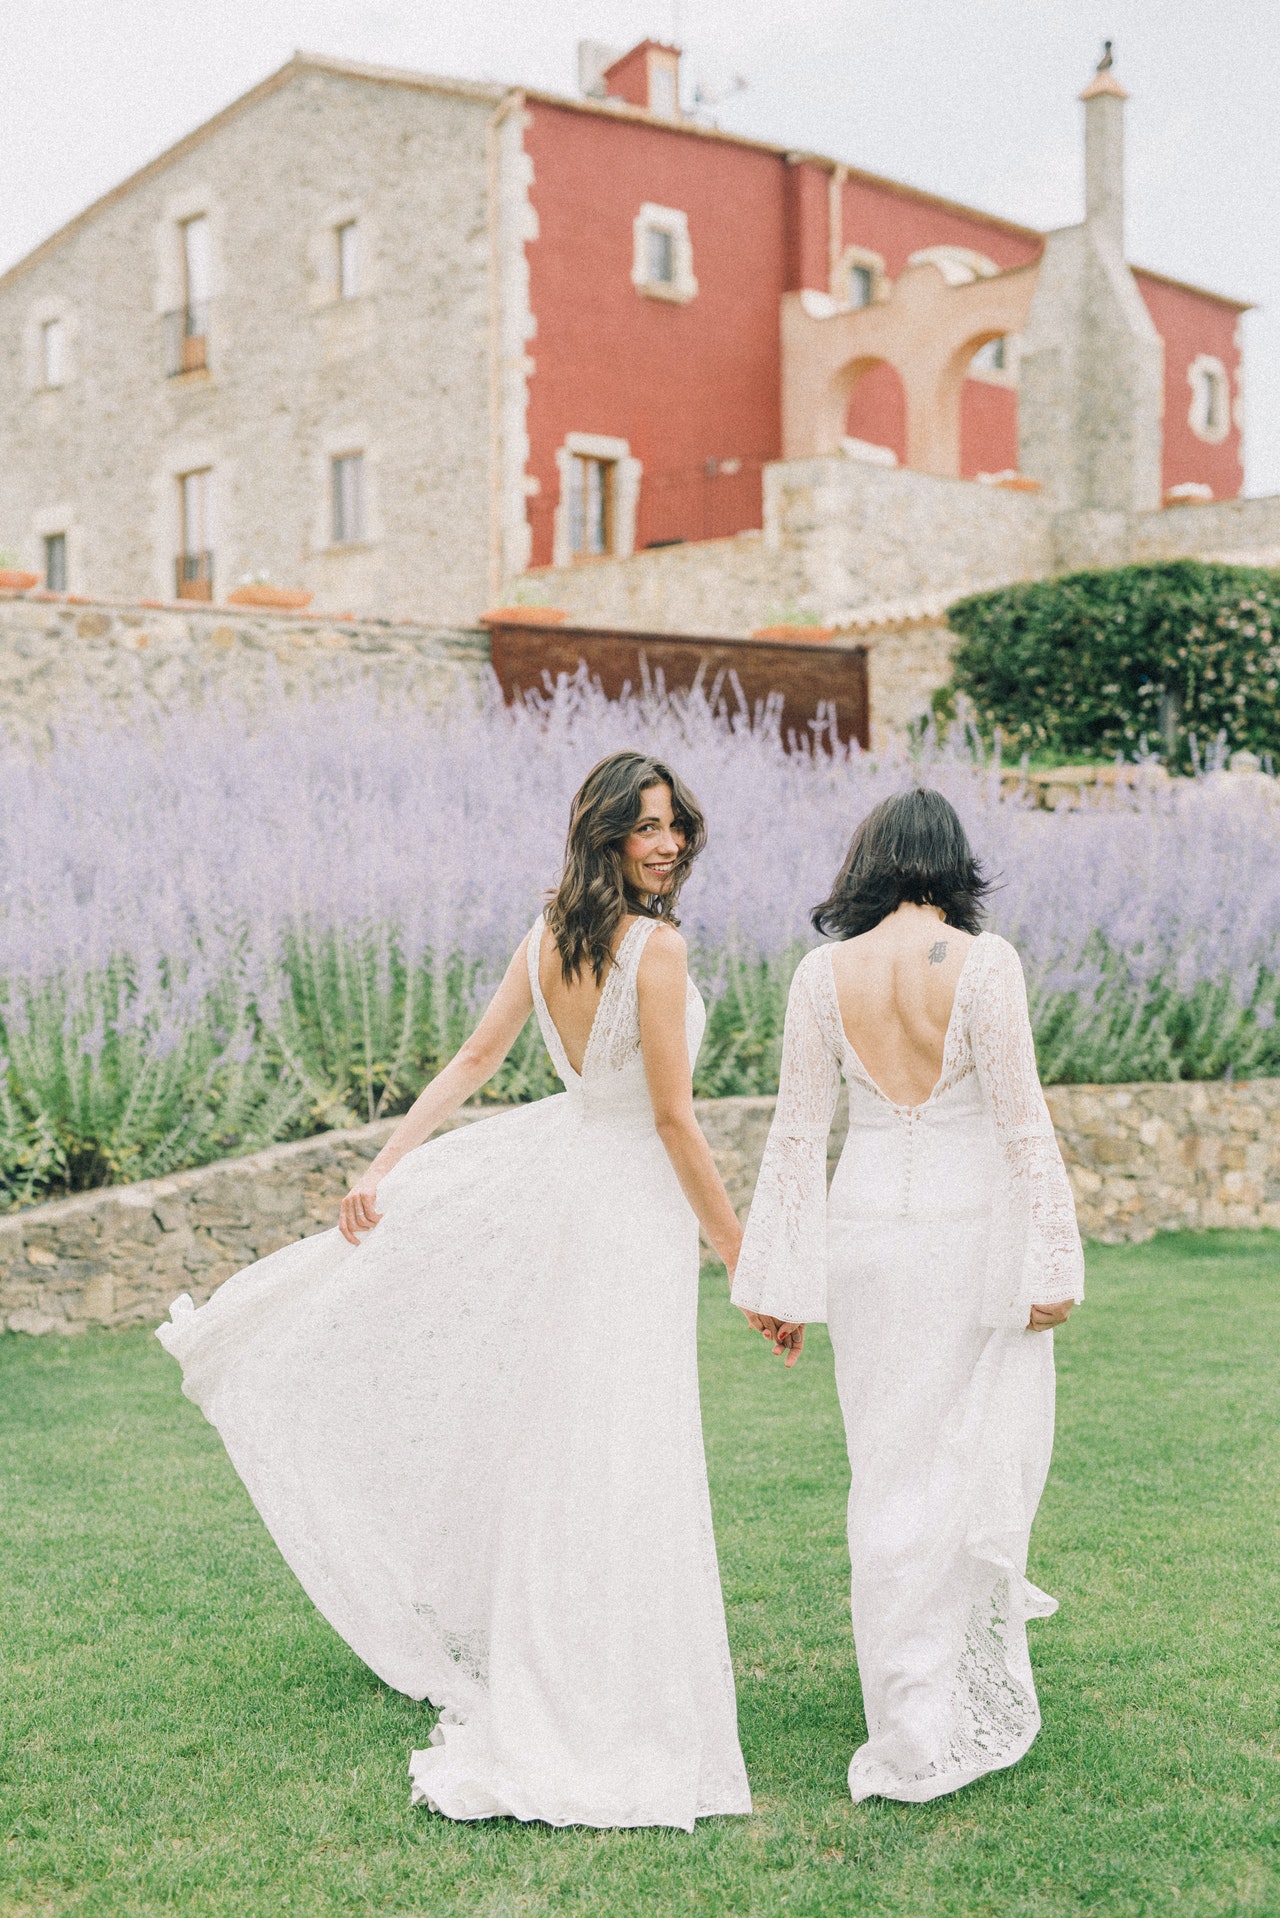 Two brides walking through lavender – wedding day timeline